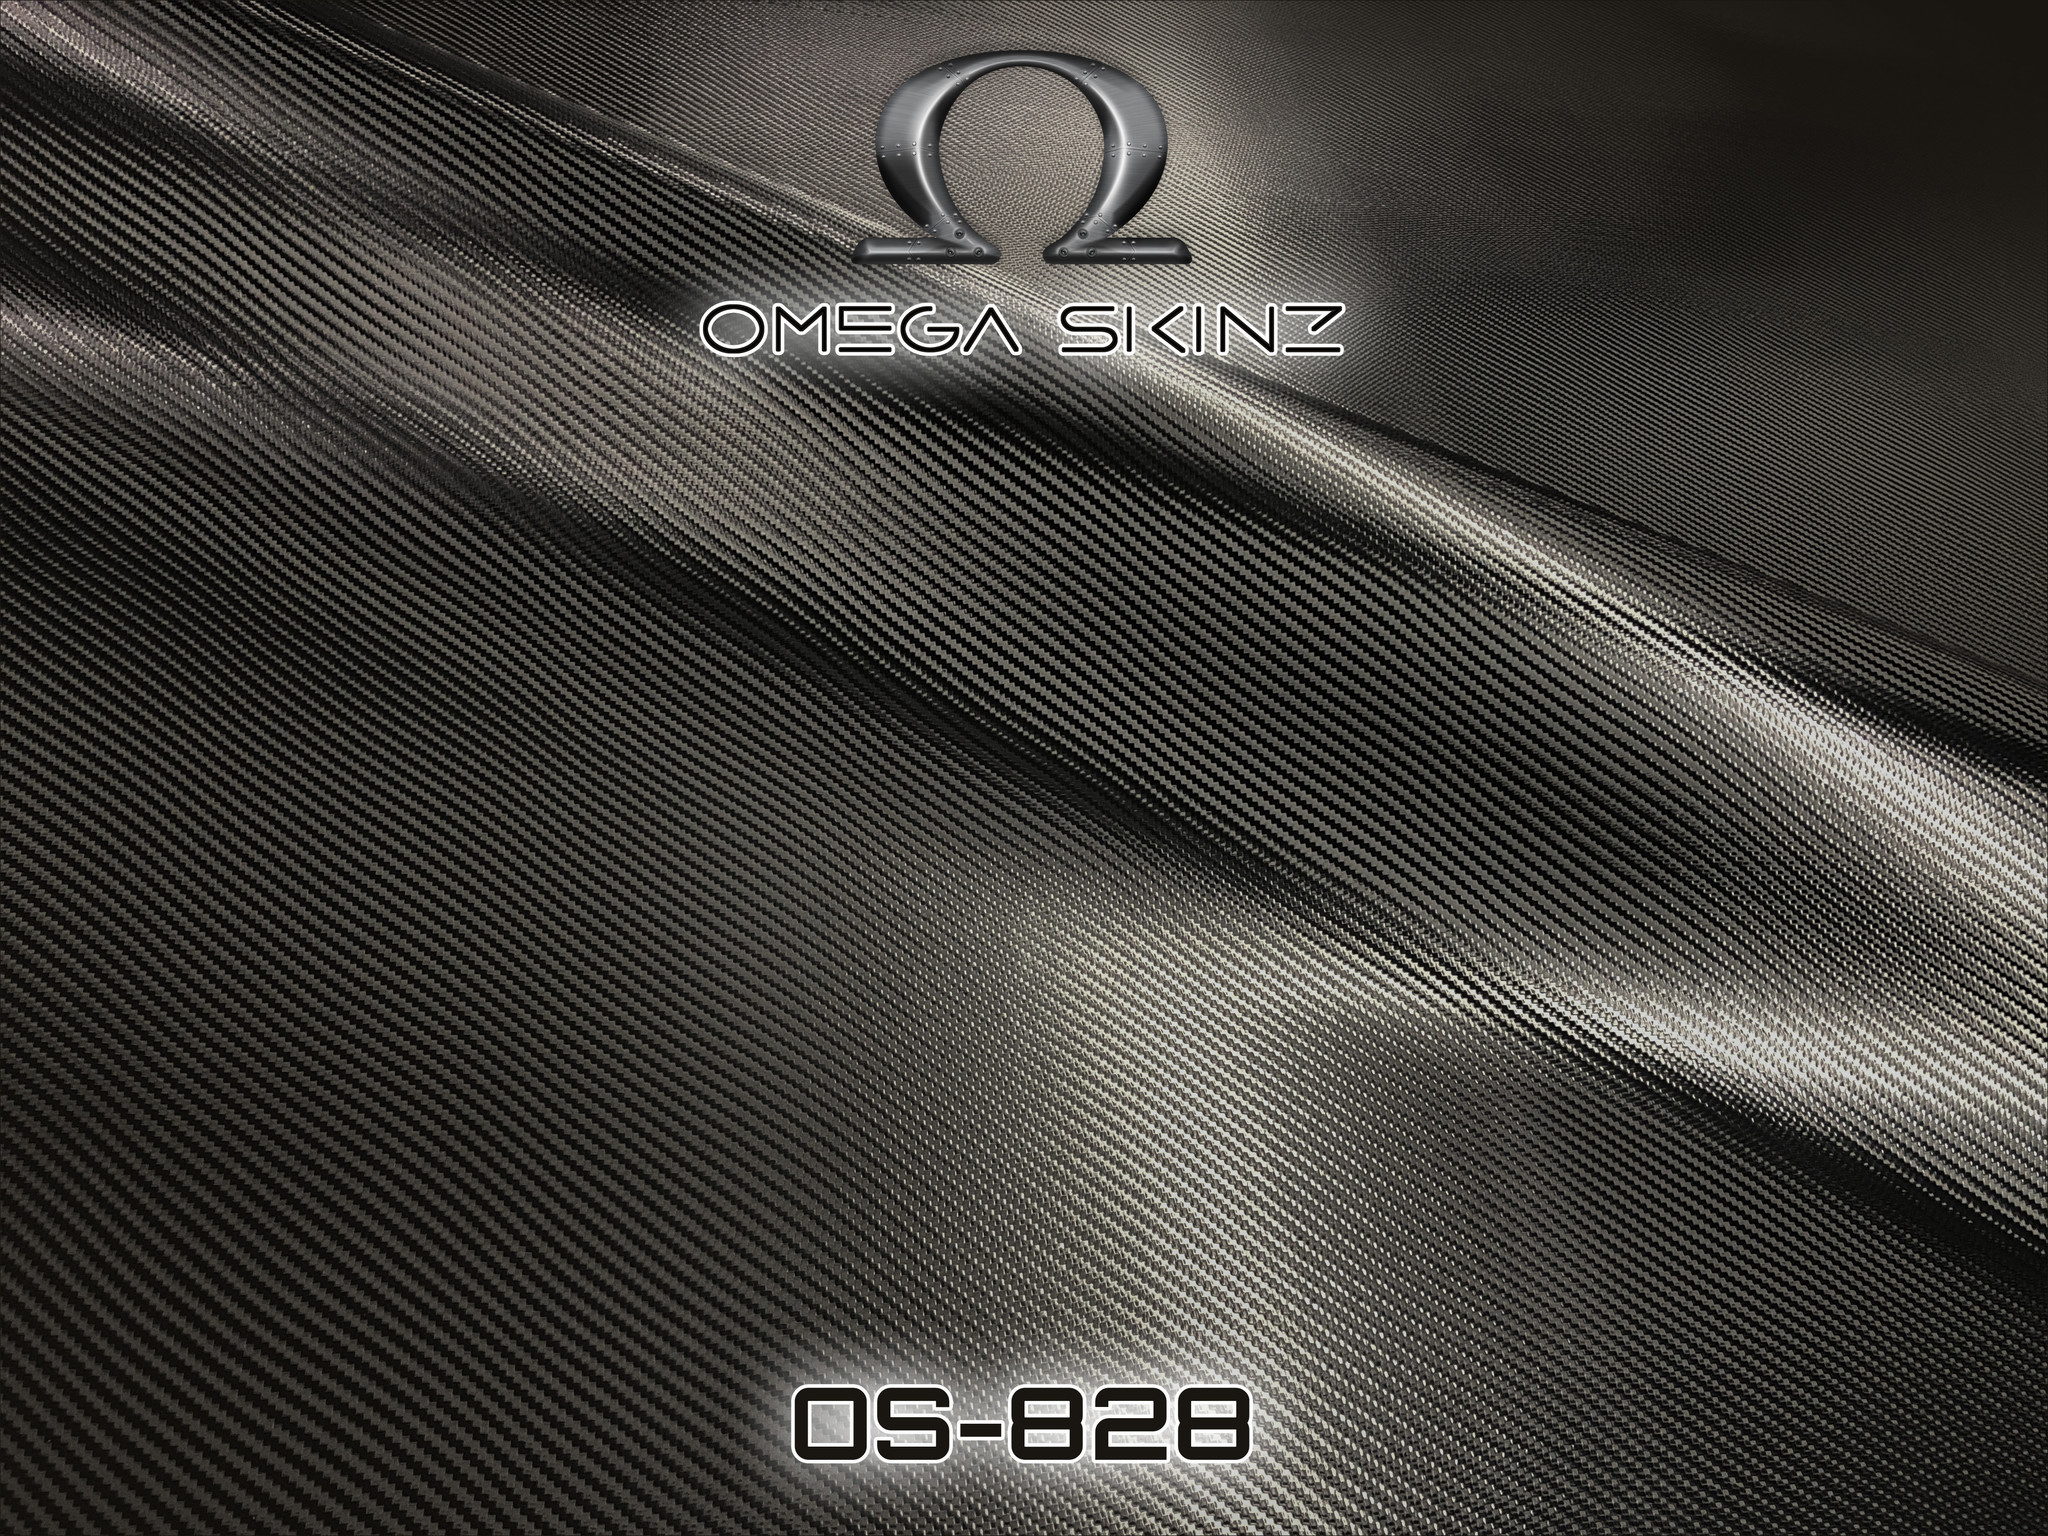 OS-828 Carbon Black